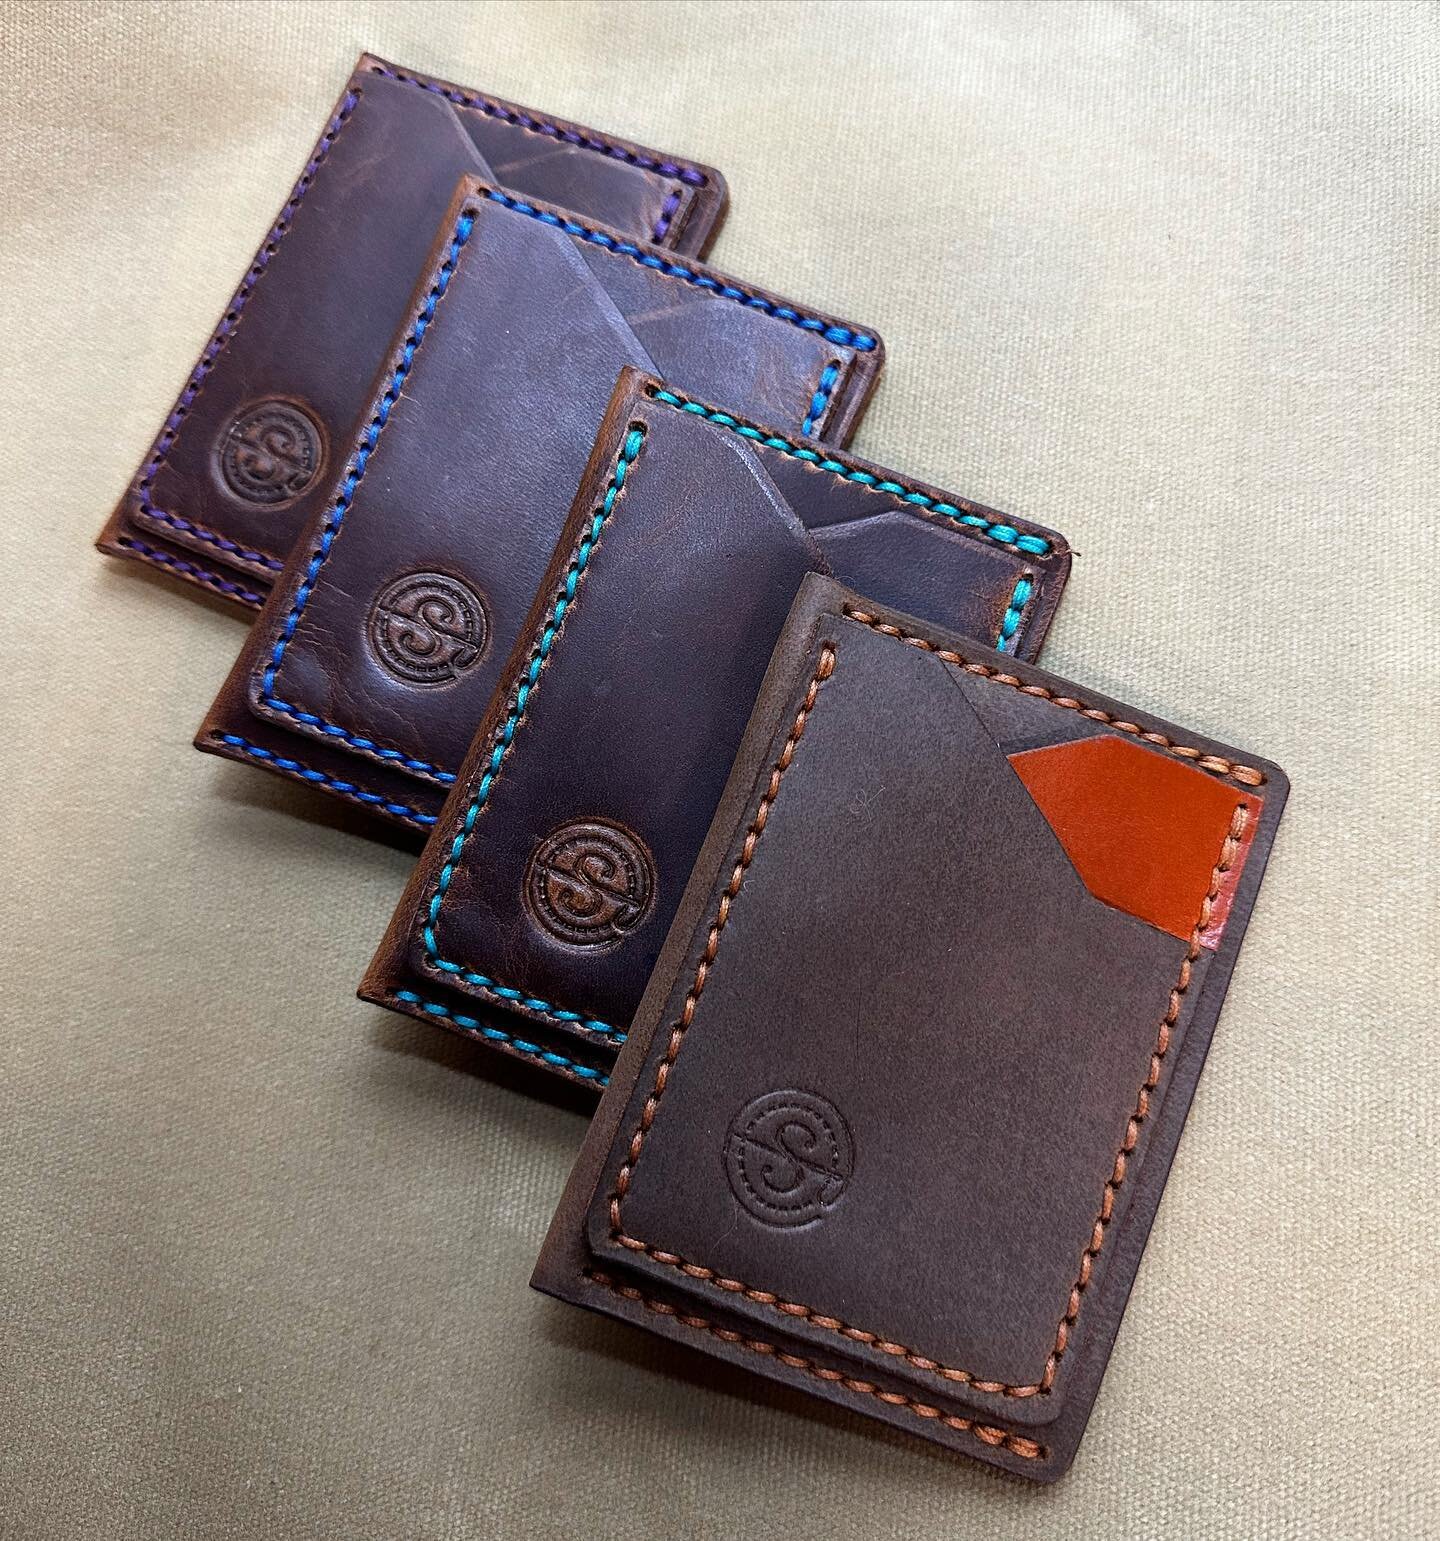 Latest batch of Rustic Modern Card Wallets.